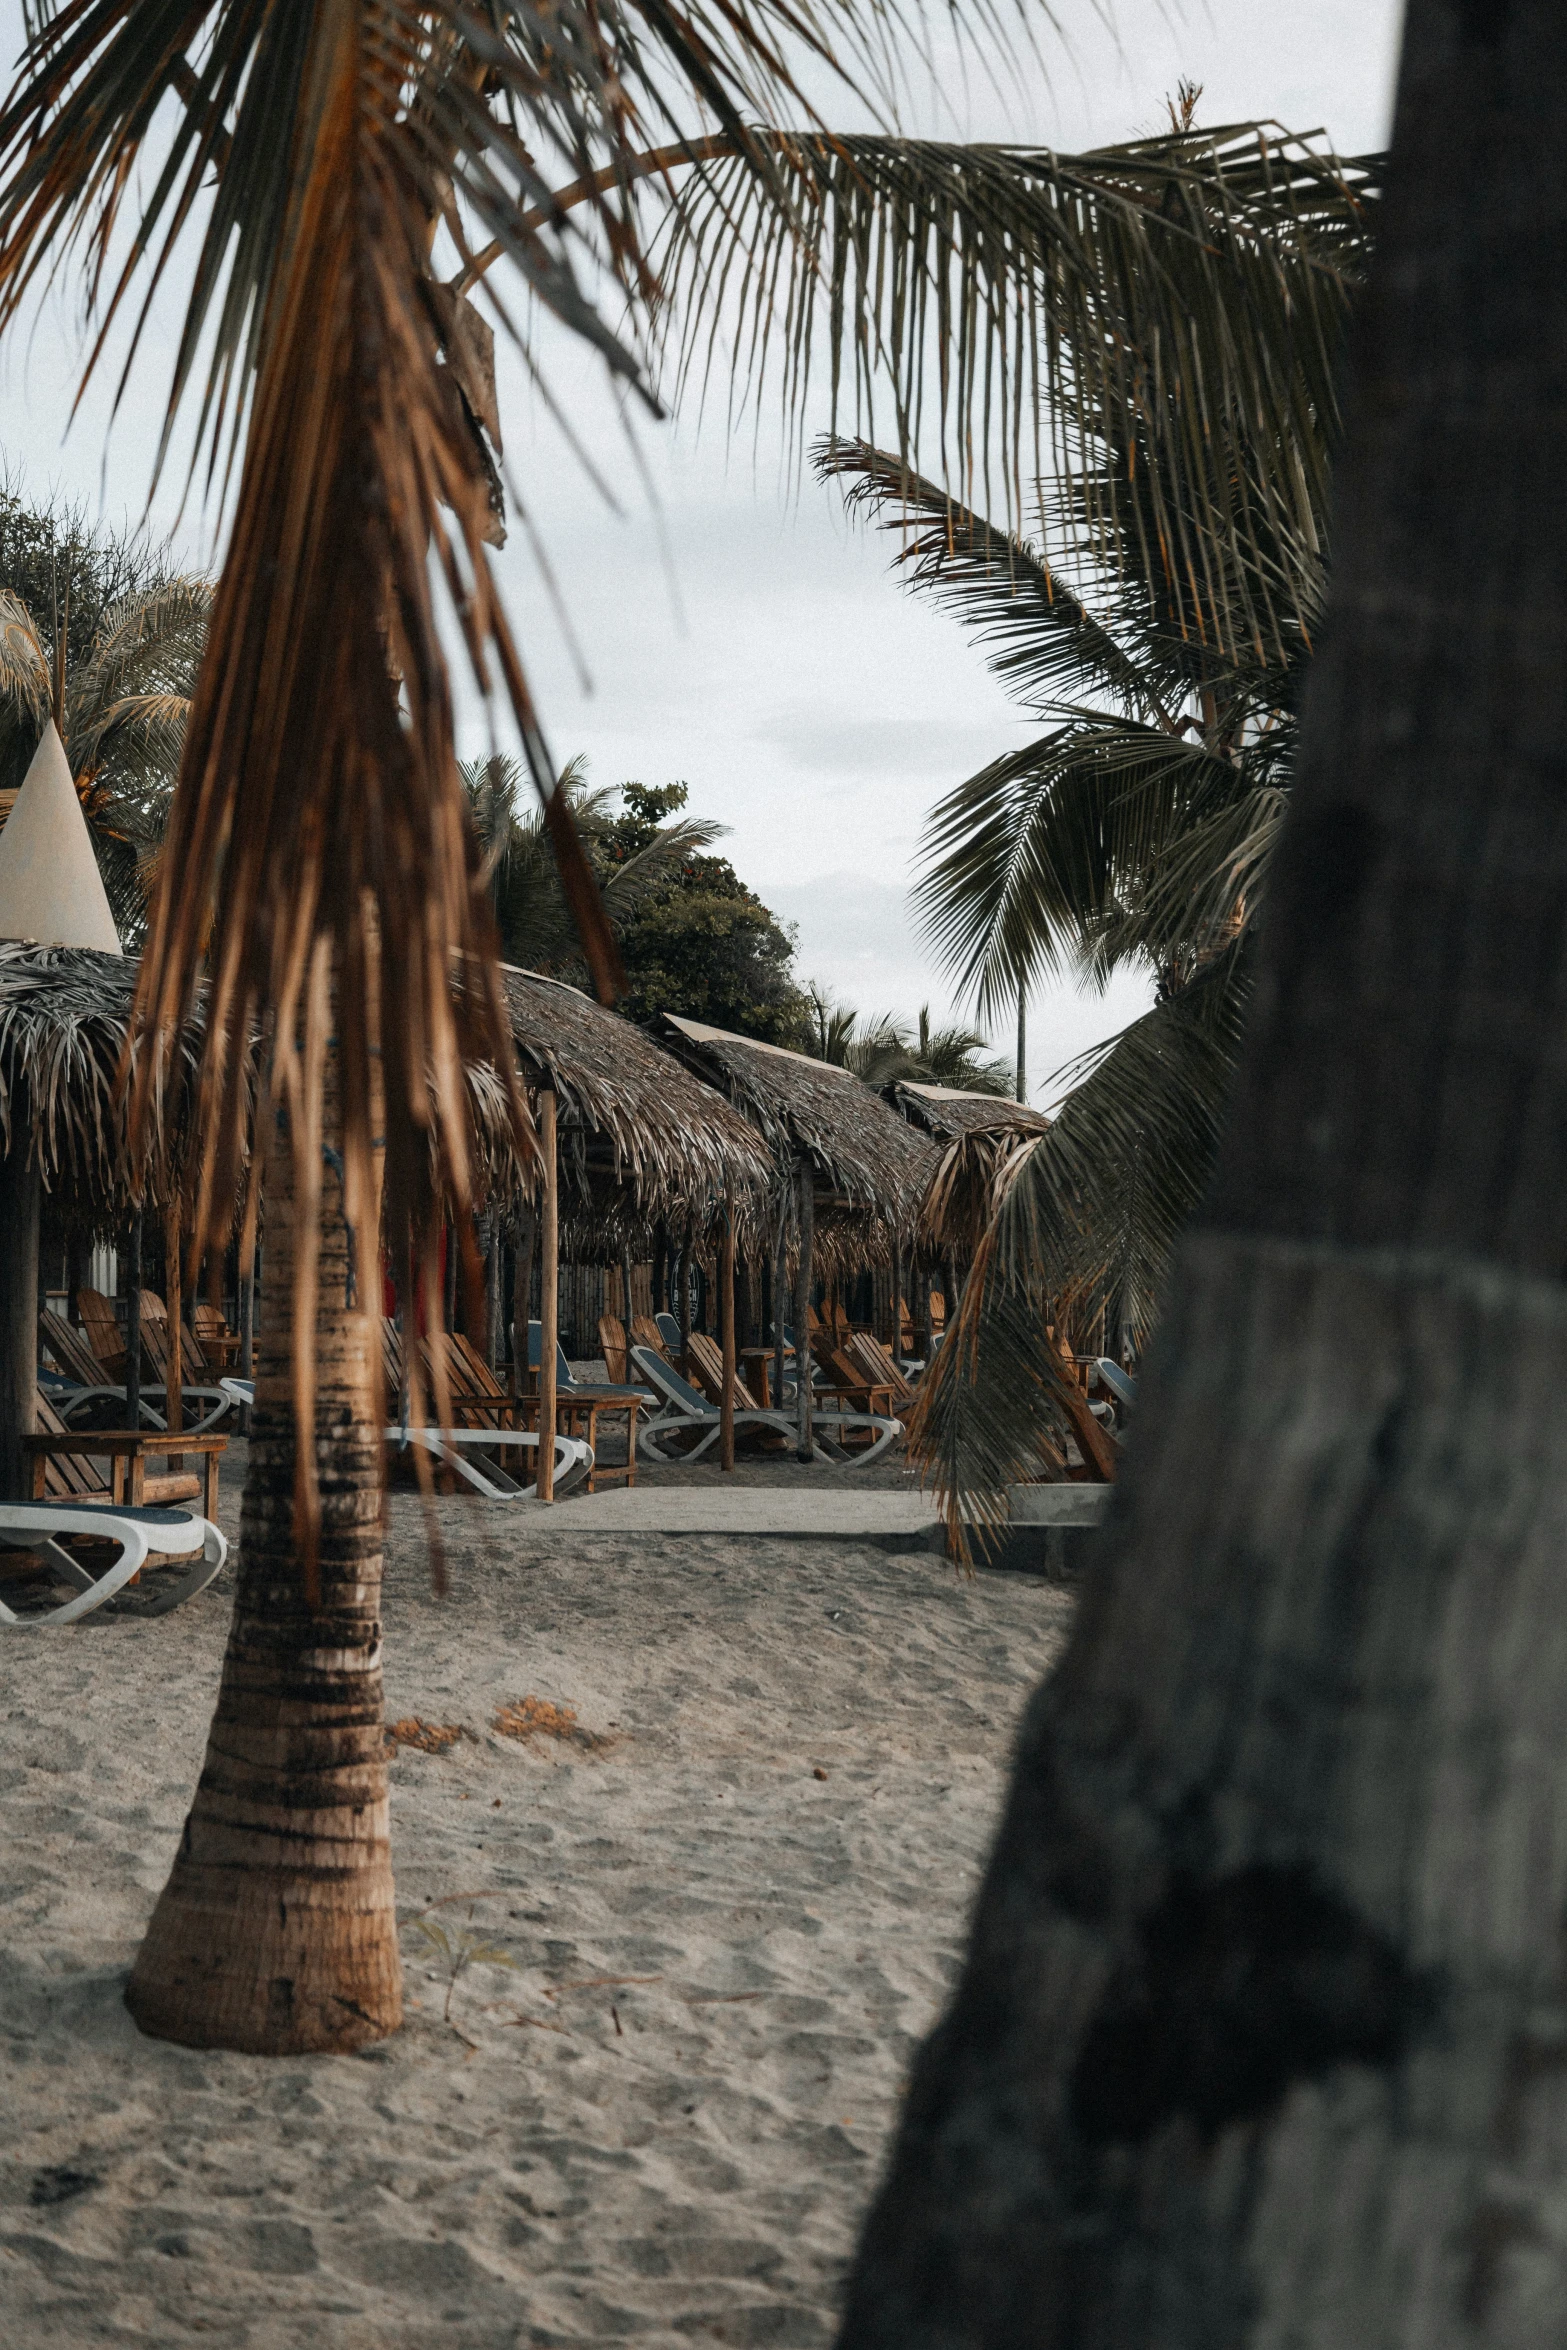 a lone palm tree sits near some huts